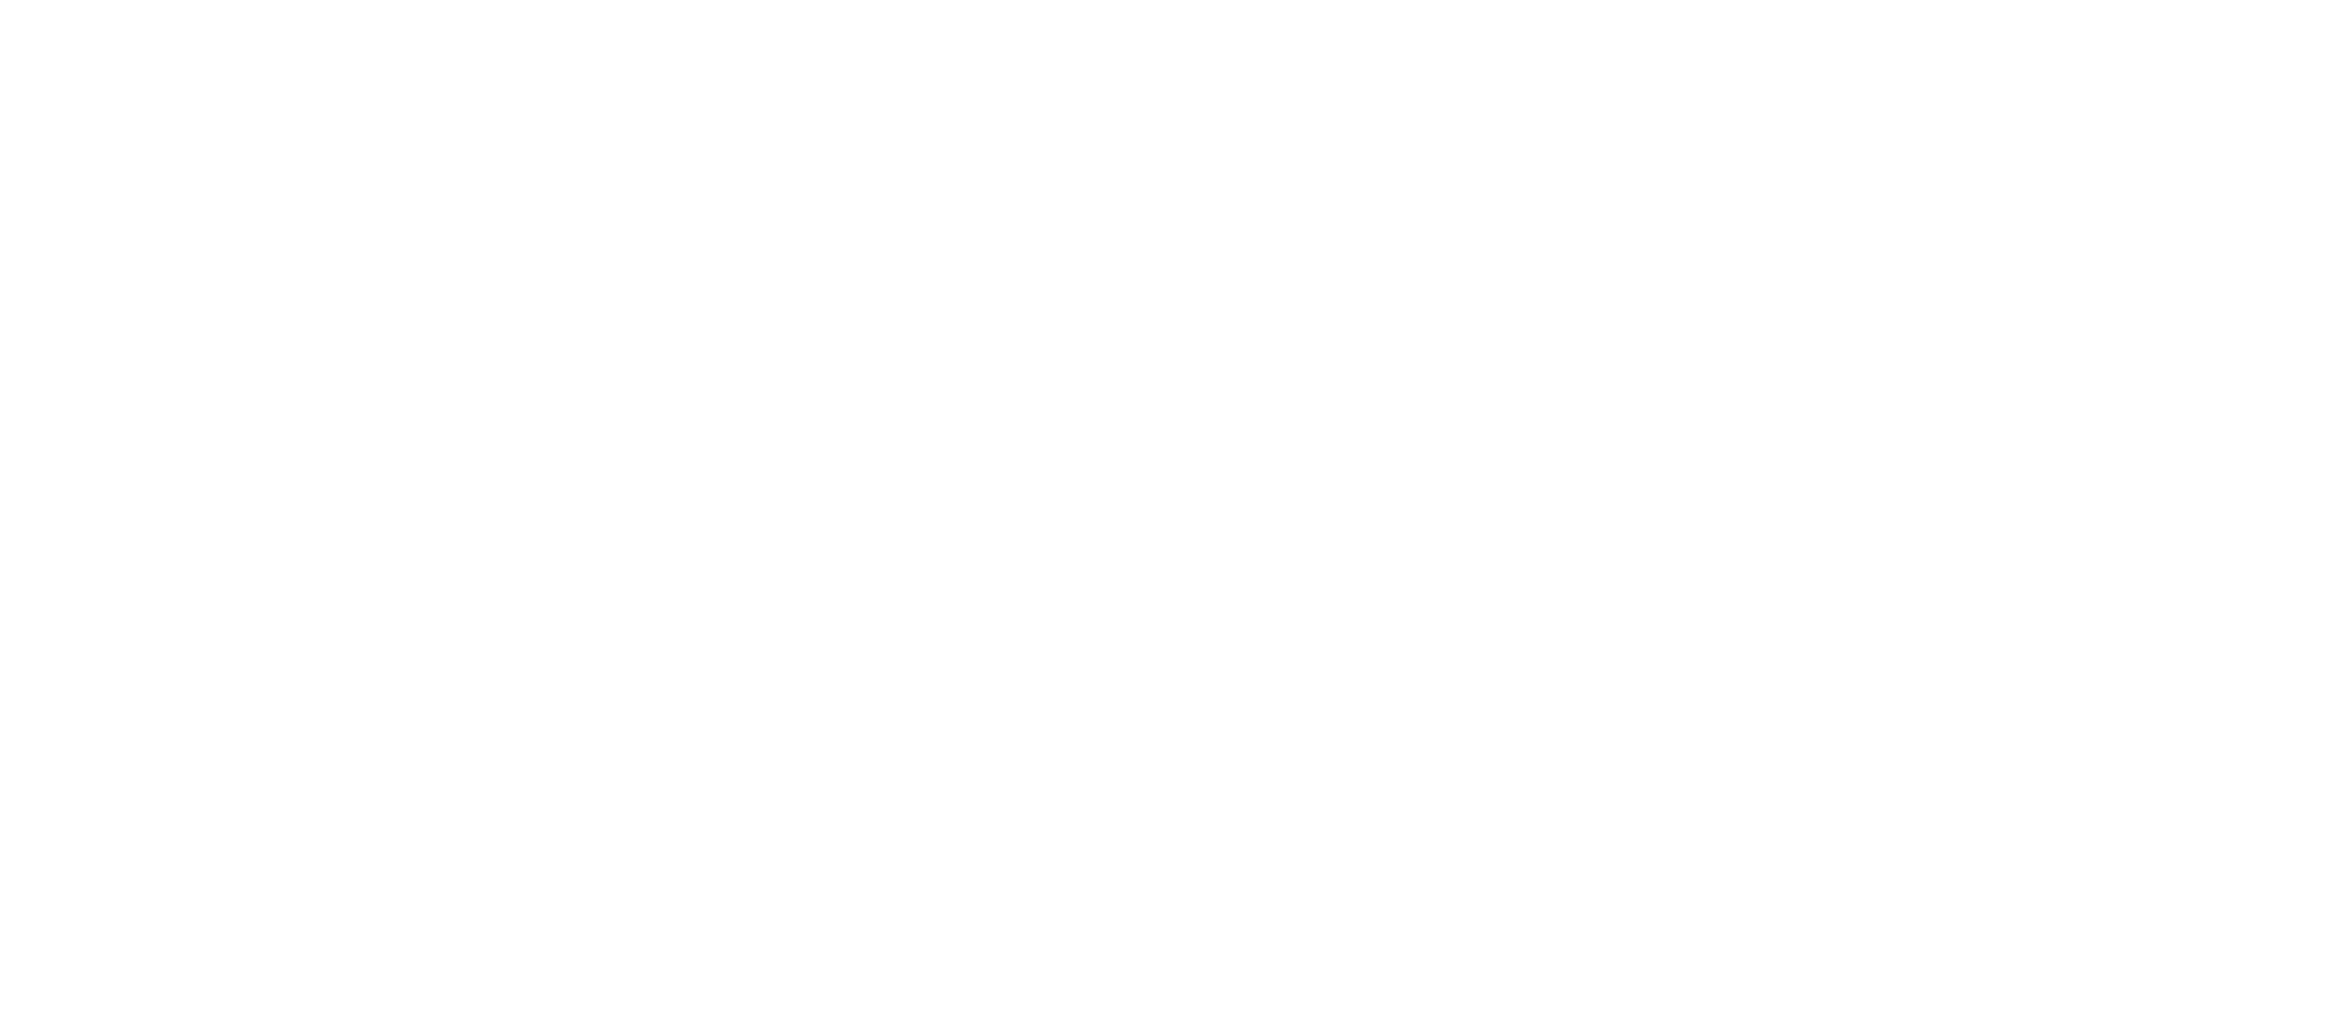 Flyer View Group logo White